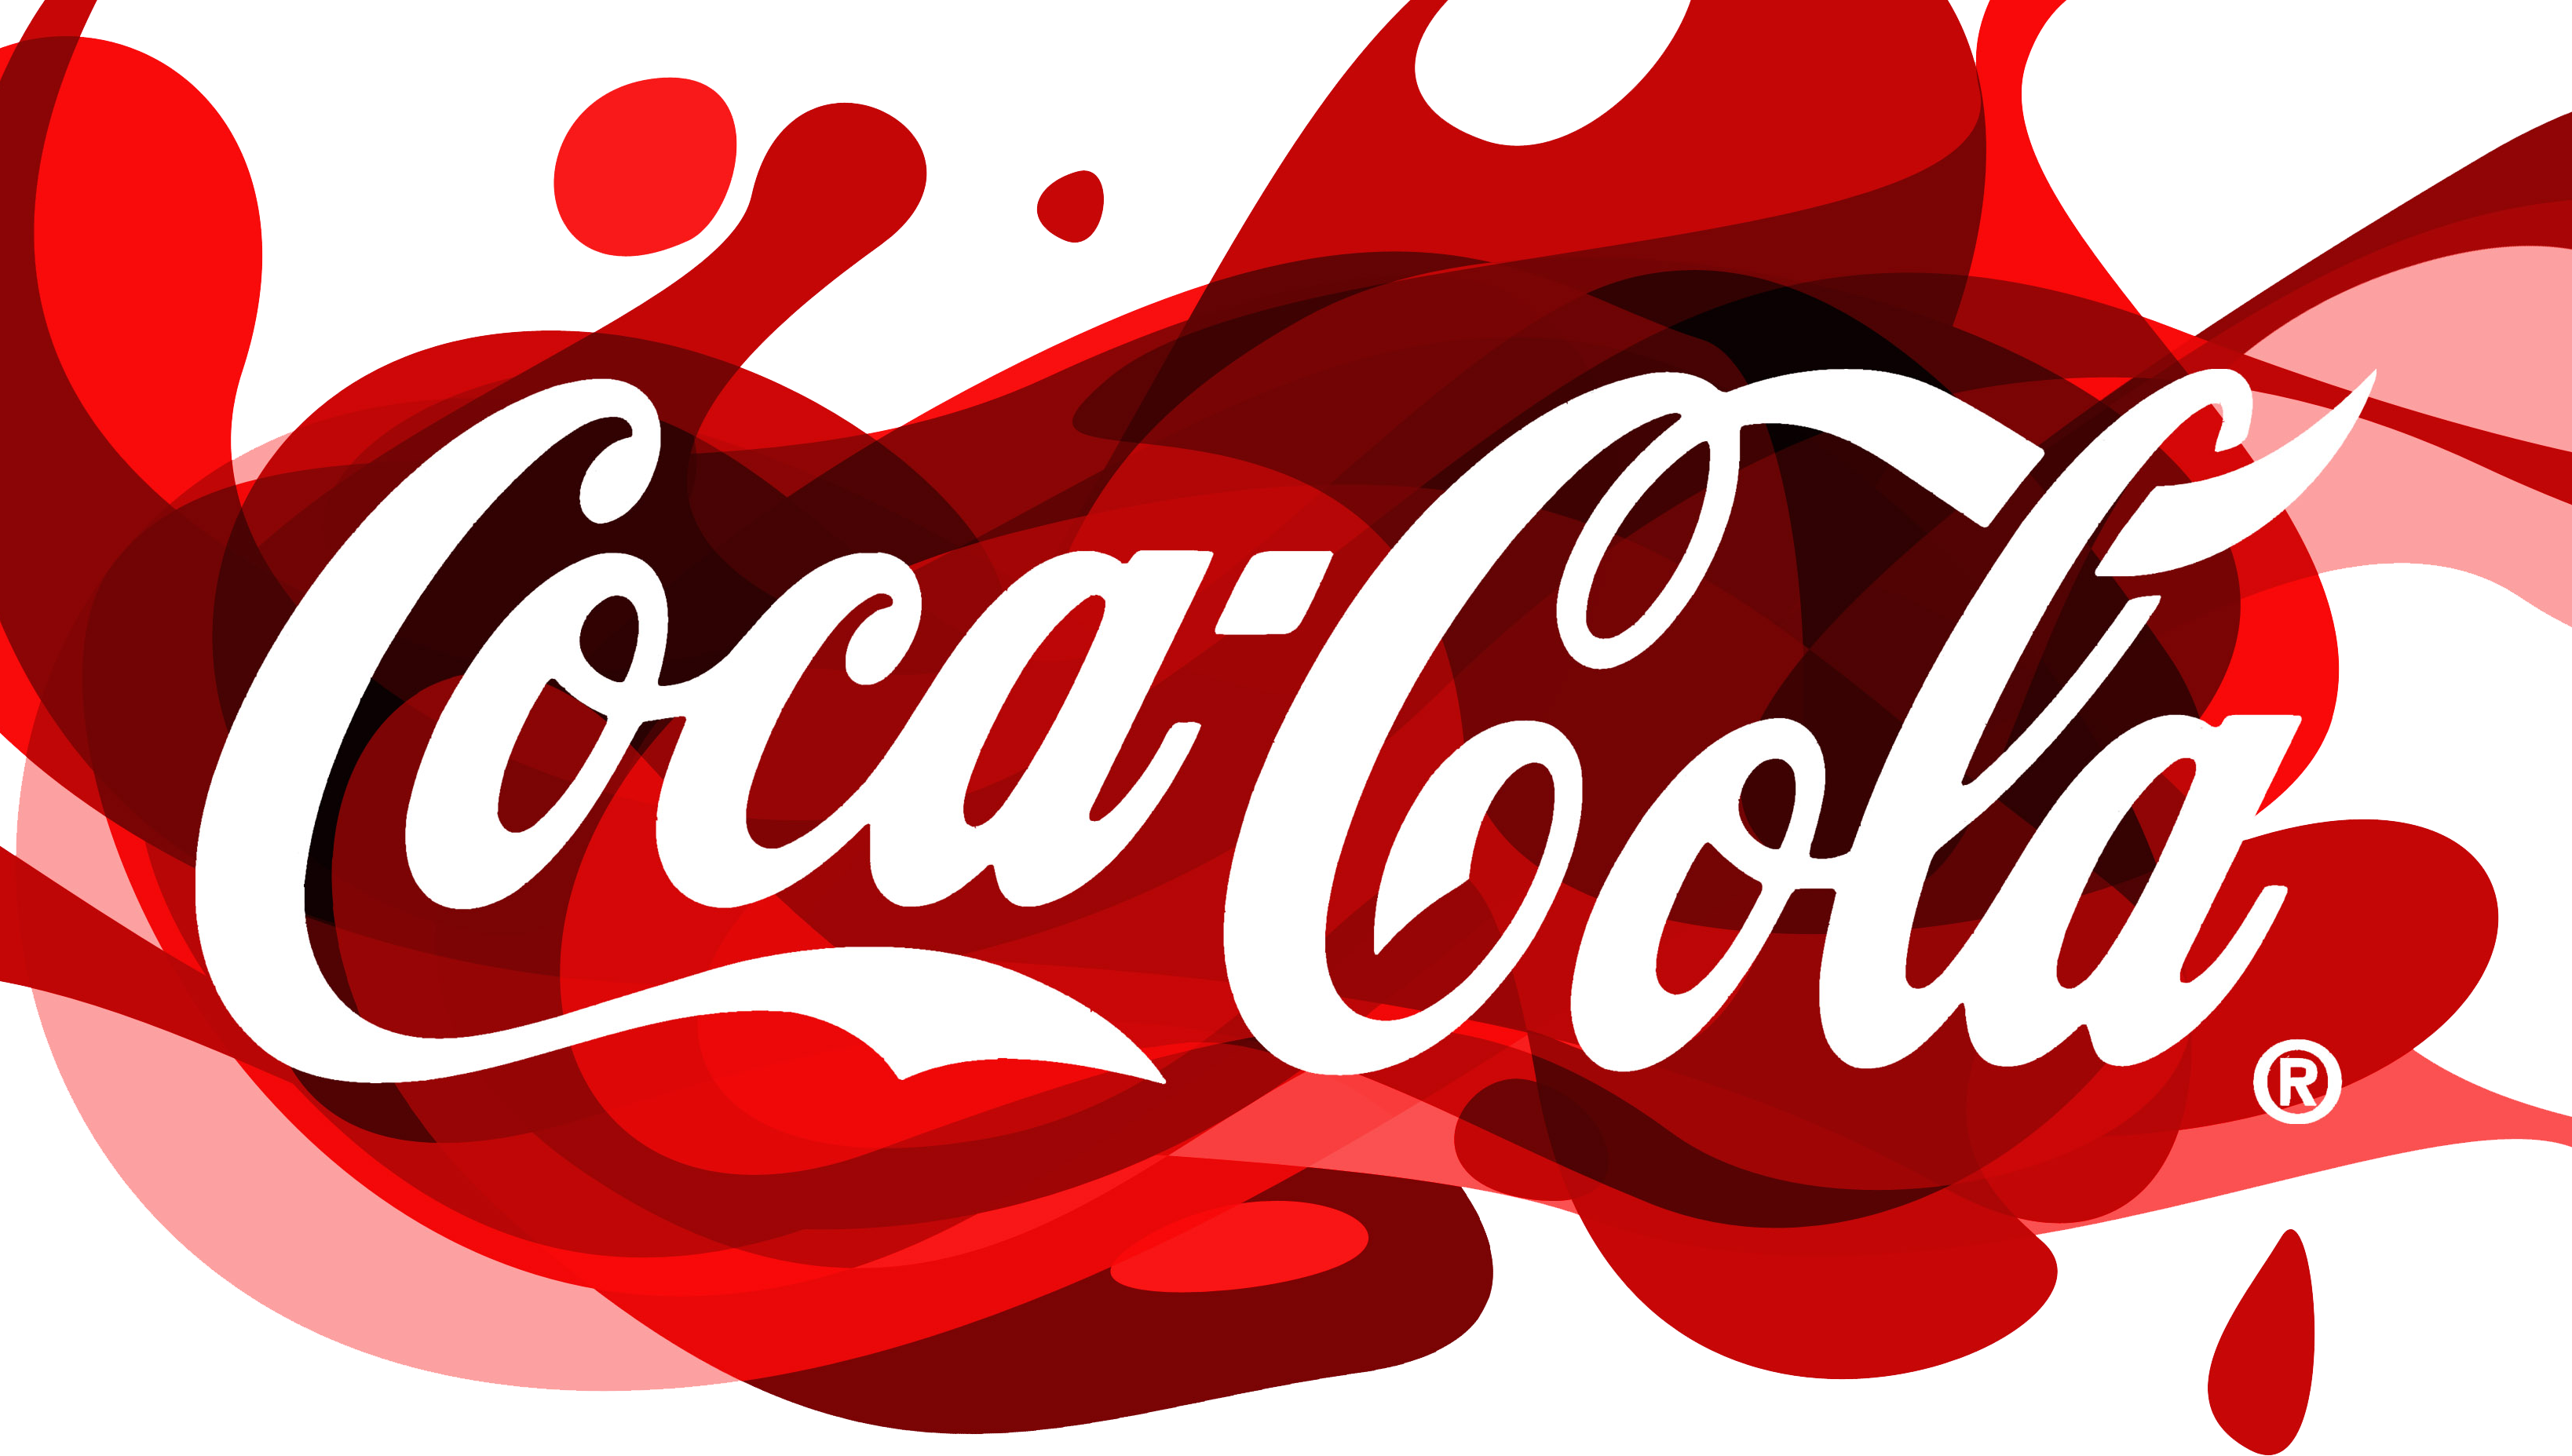 Герб колы. Кока кола. Логотип компании Кока кола. Кола надпись. Отряд «Coca-Cola».